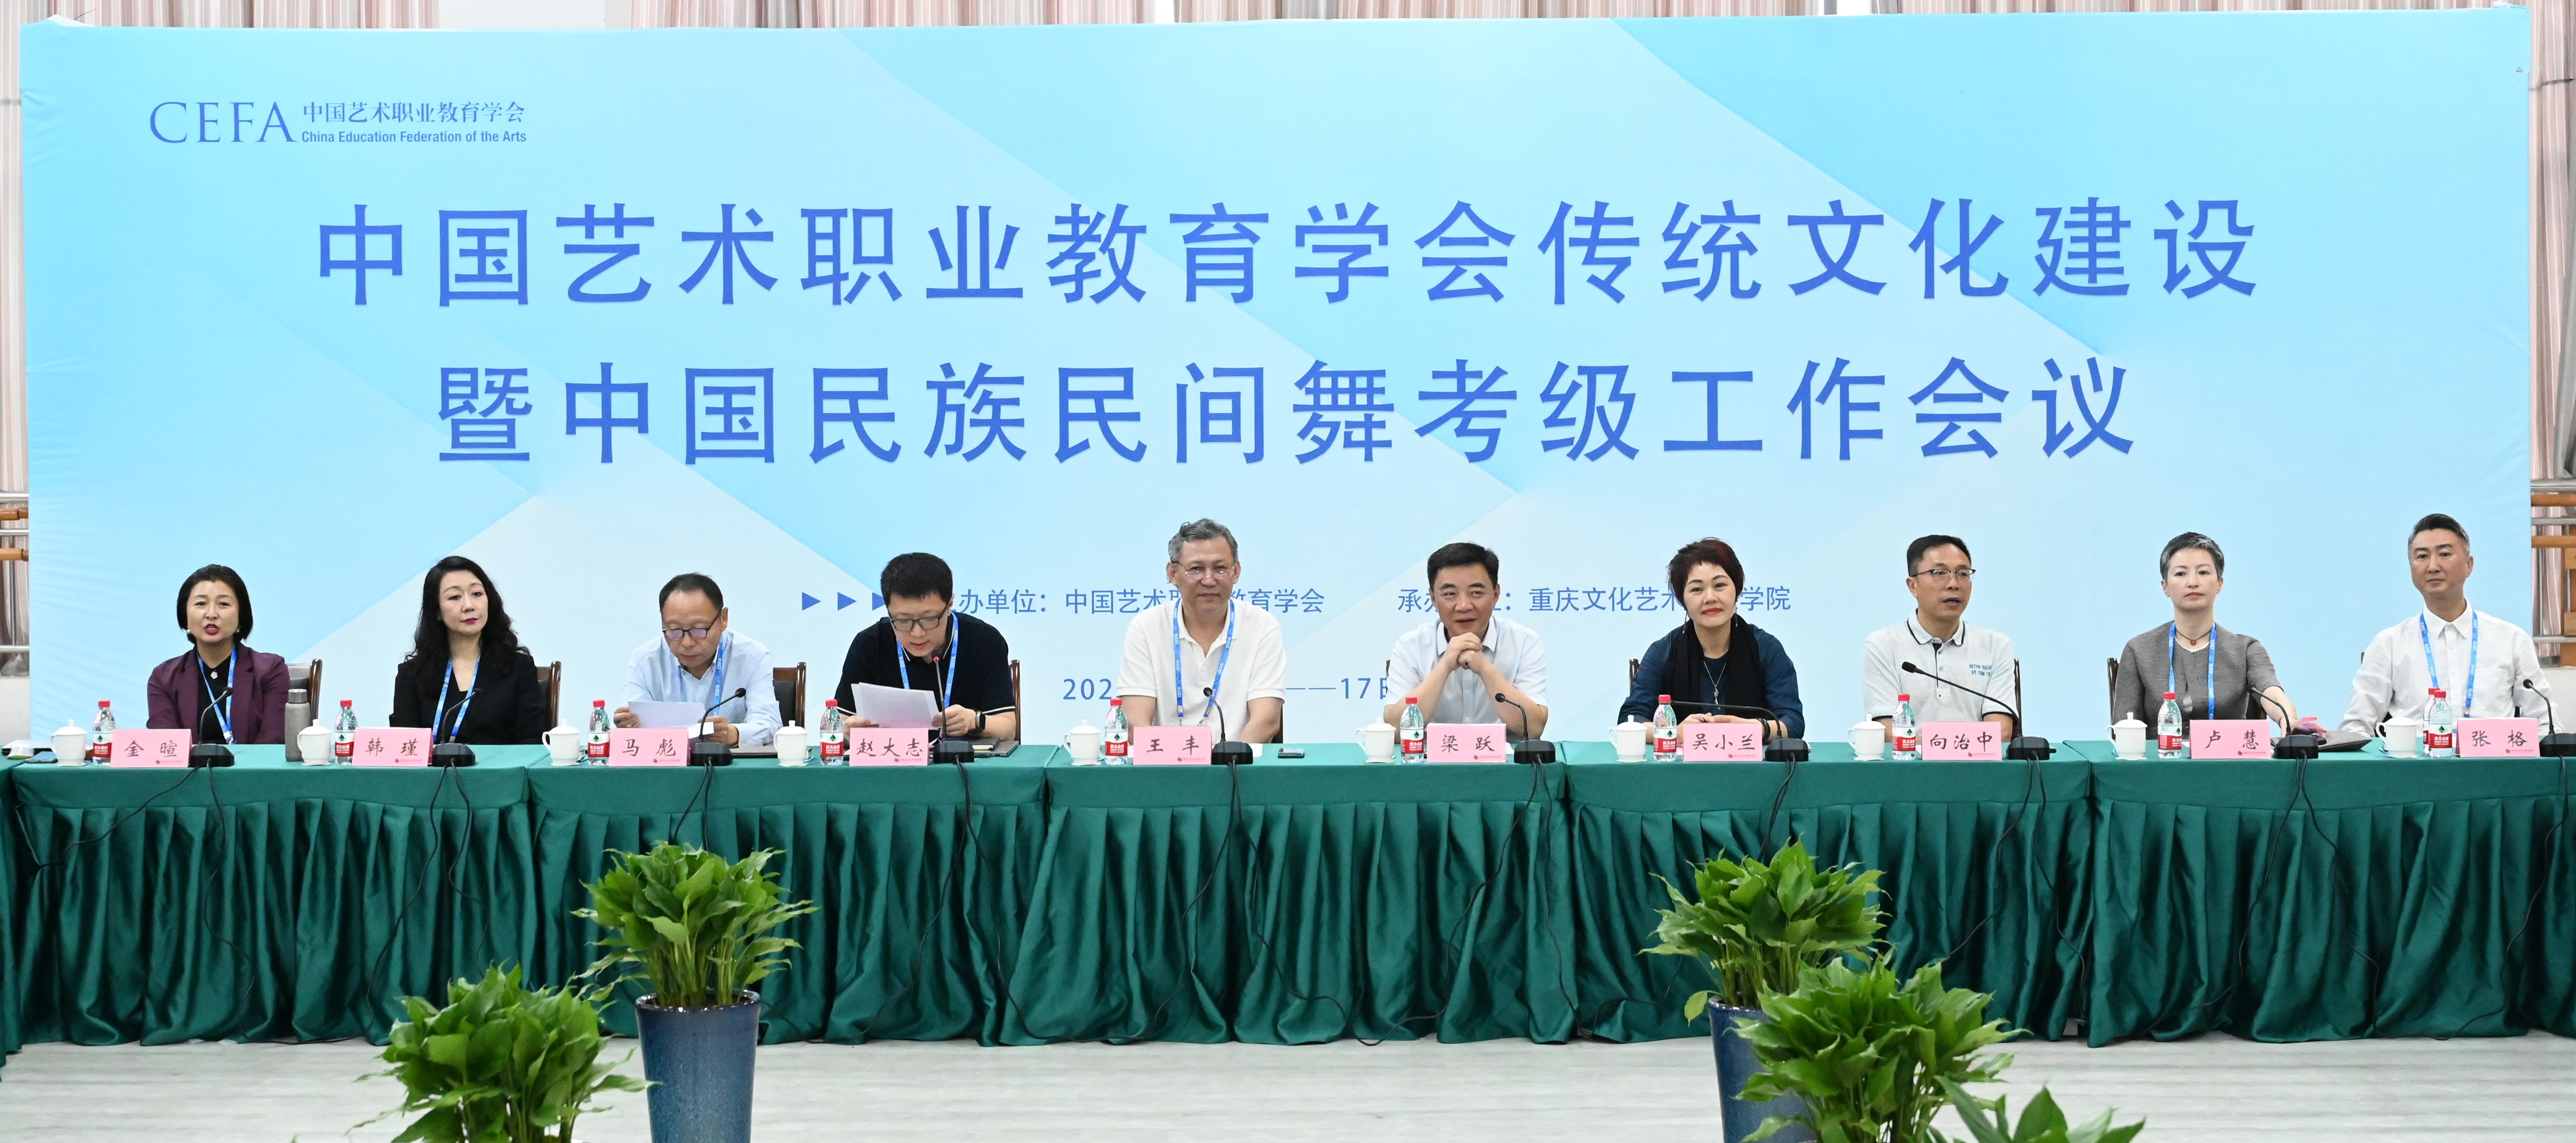 CEFA传统文化建设暨中国民族民间舞考级工作会议在渝举行